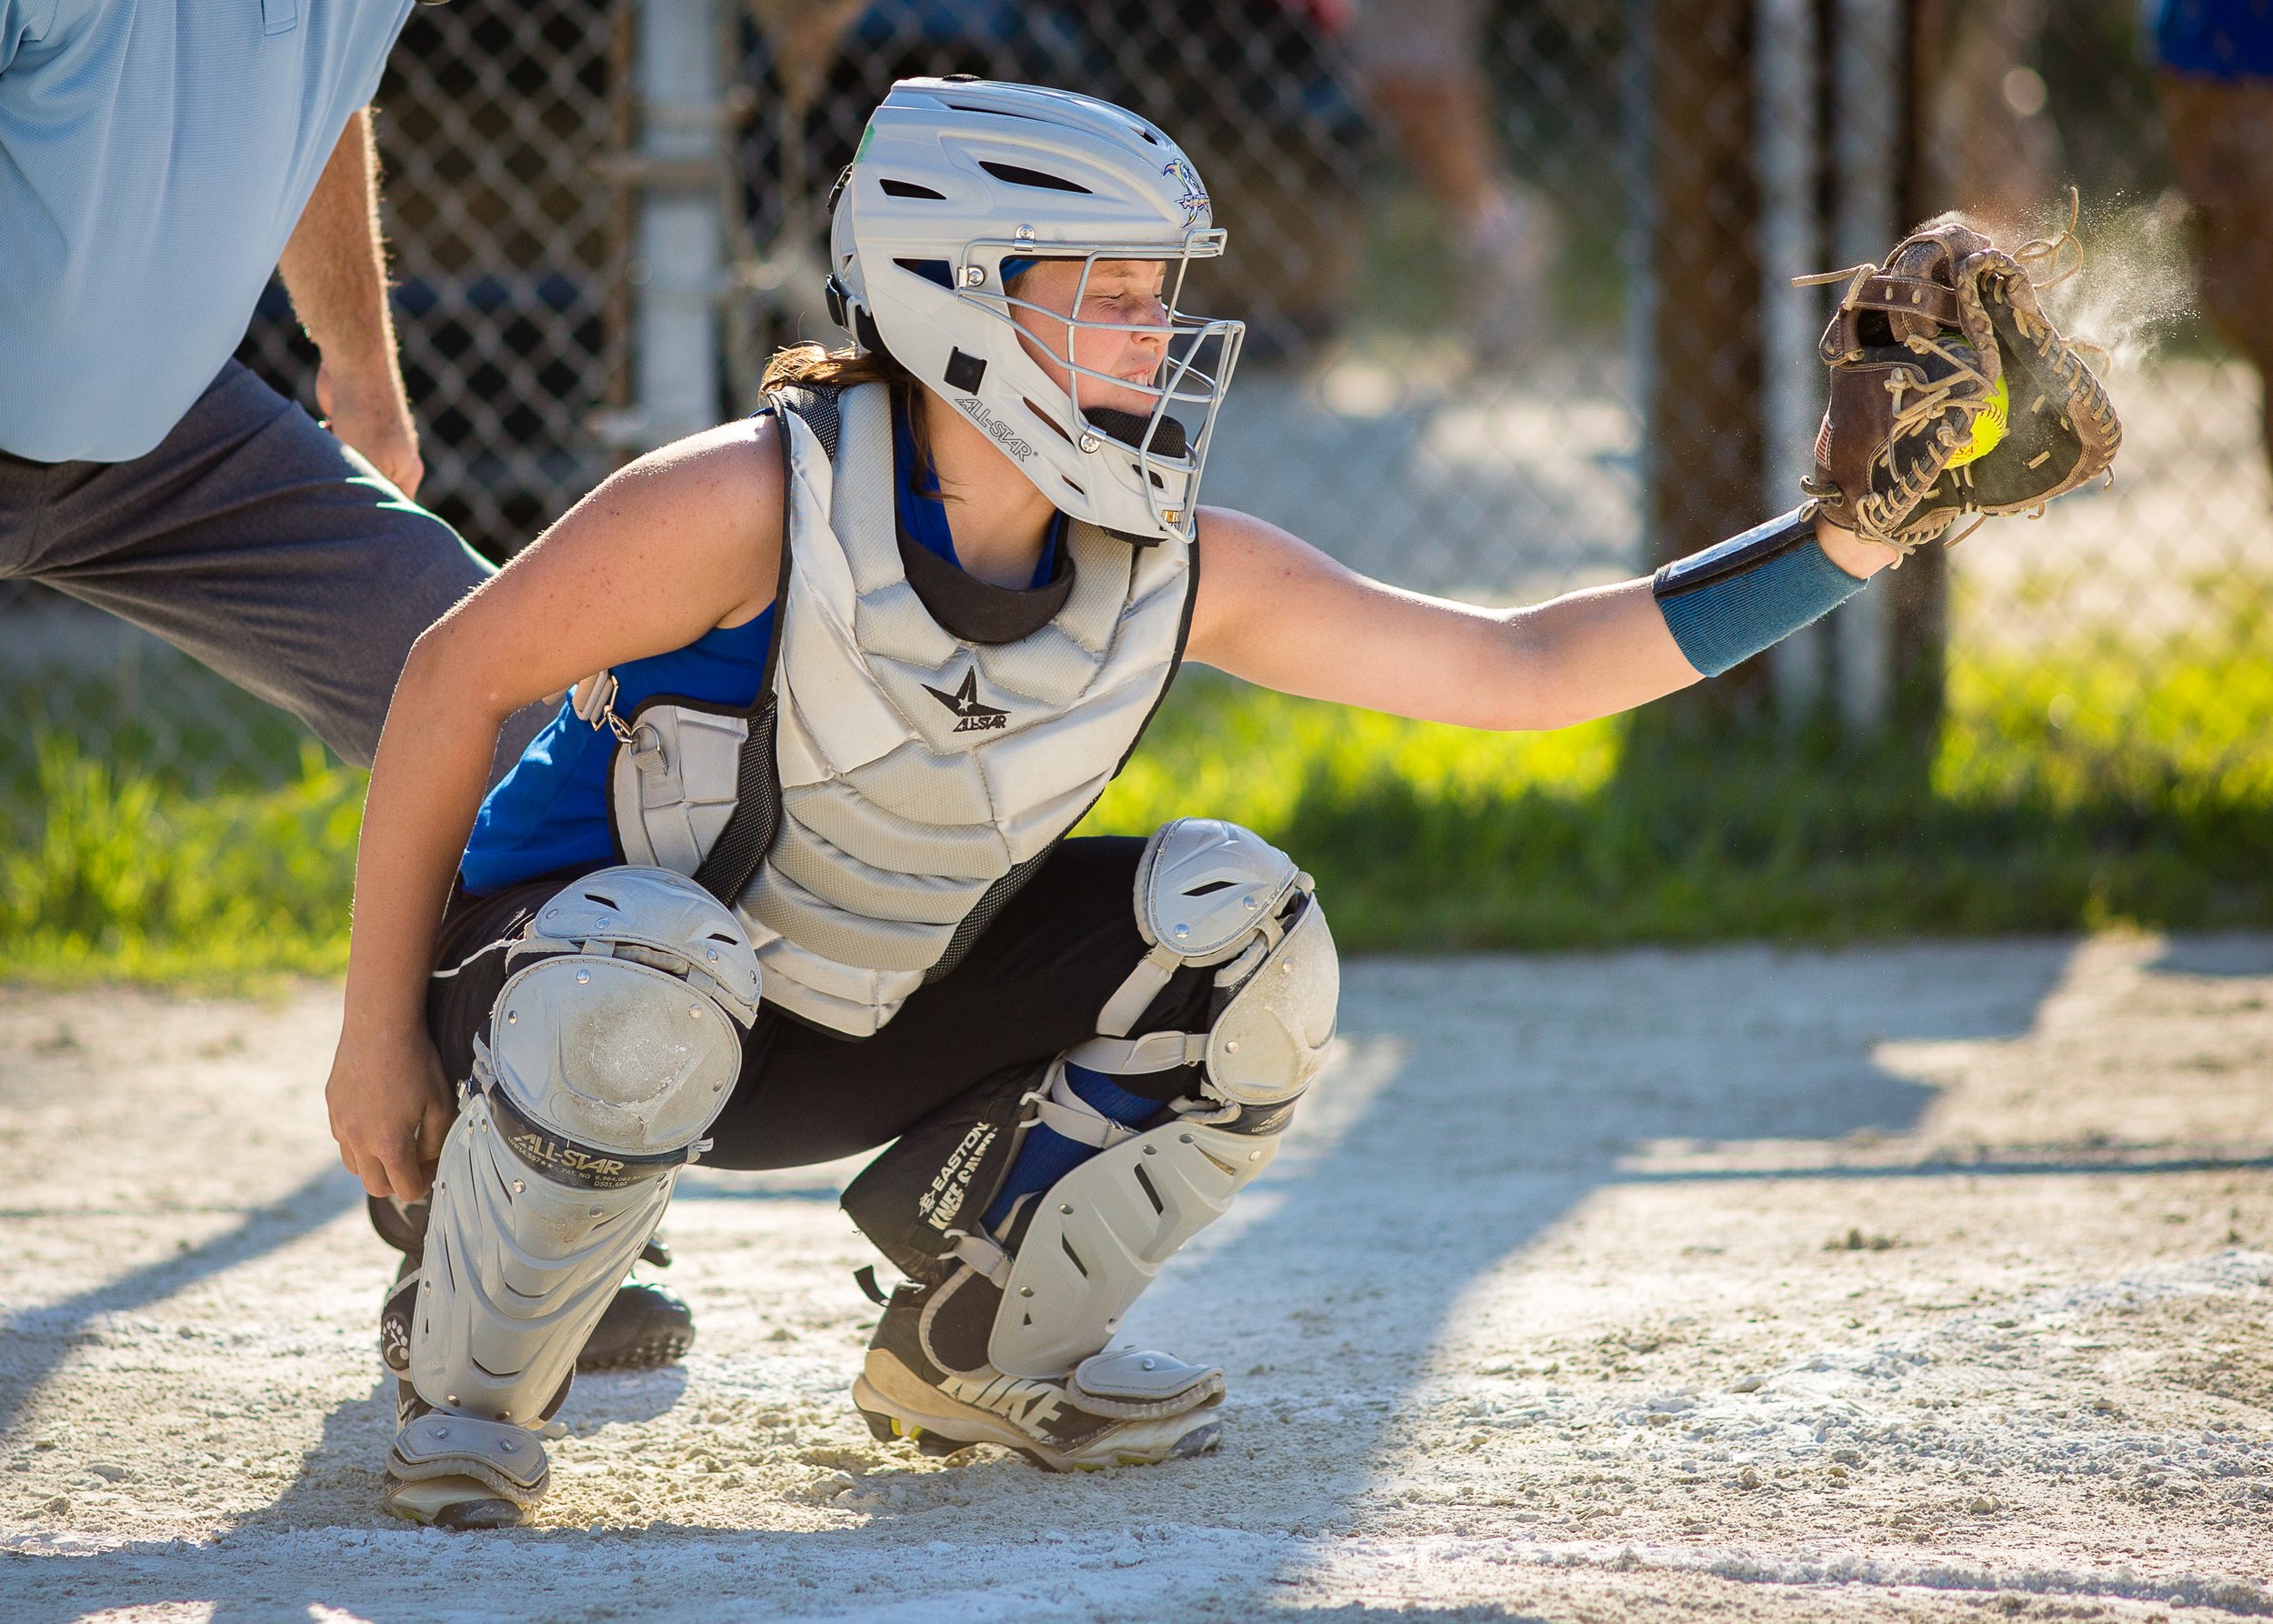 Middle school catcher, Nashua, N.H., July 2018